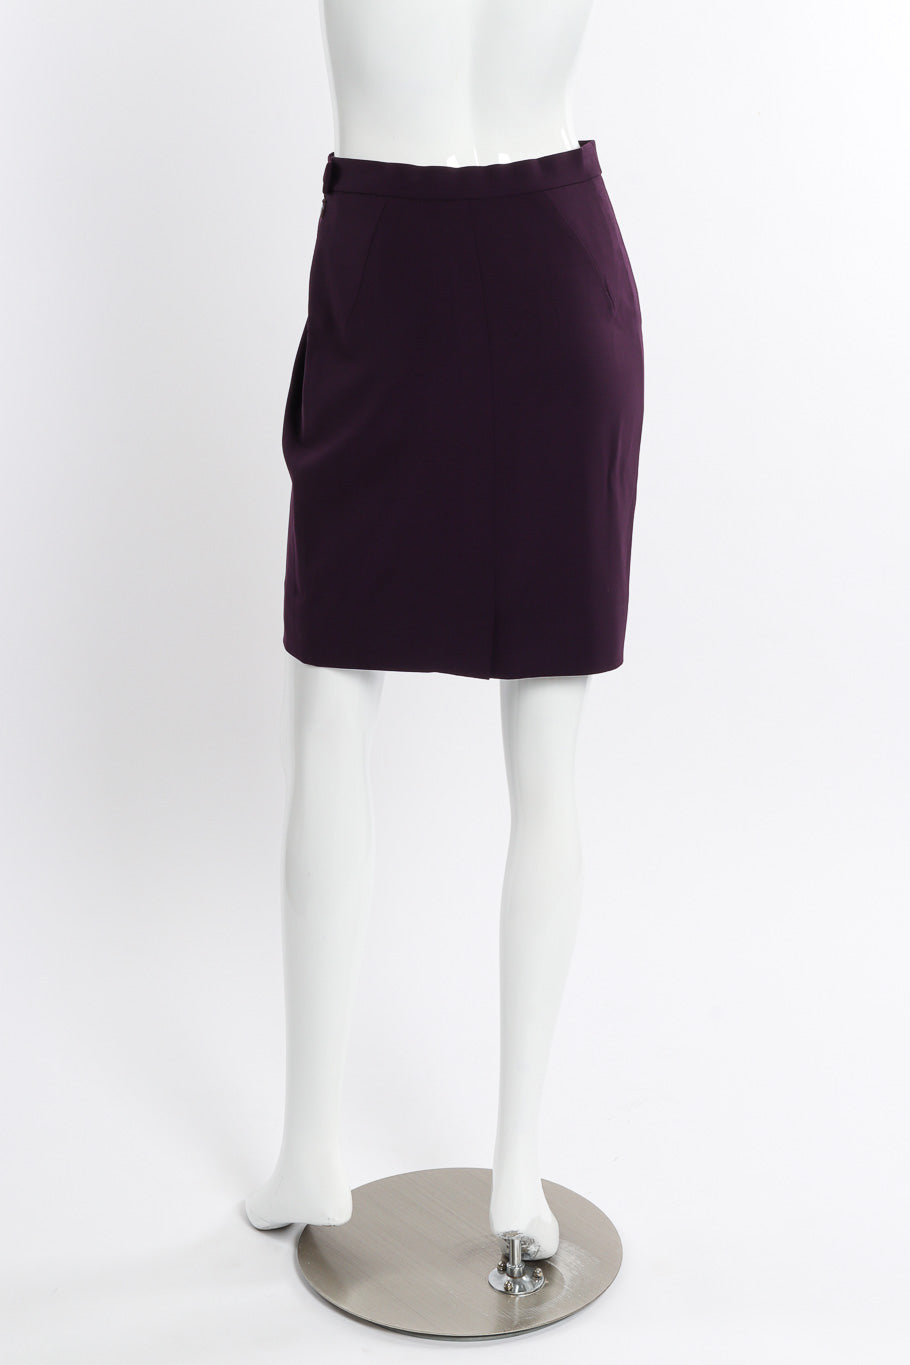 Vintage Hermés Asymmetrical Blazer and Skirt Set skirt back view on mannequin @recessla